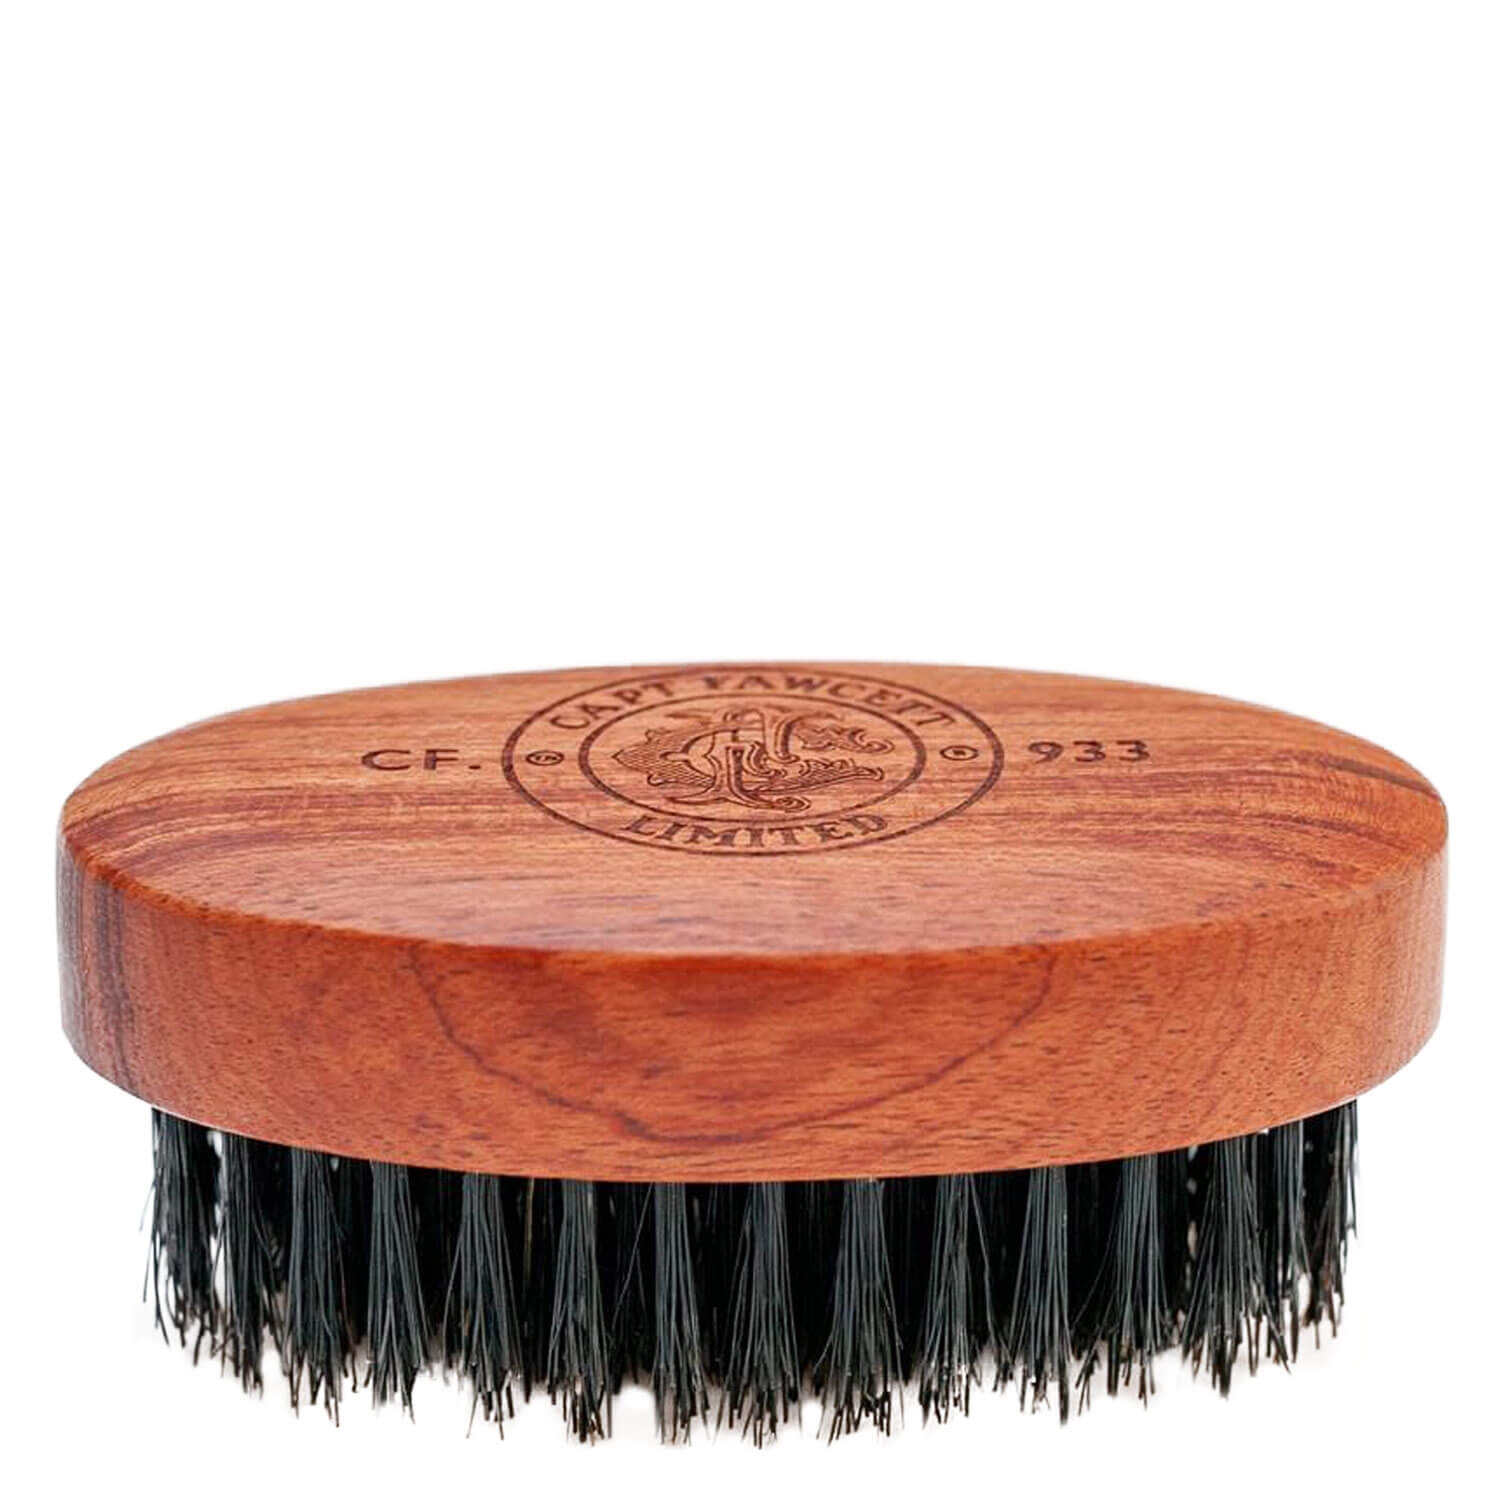 Product image from Capt. Fawcett Tools - Wild Boar Beard Brush